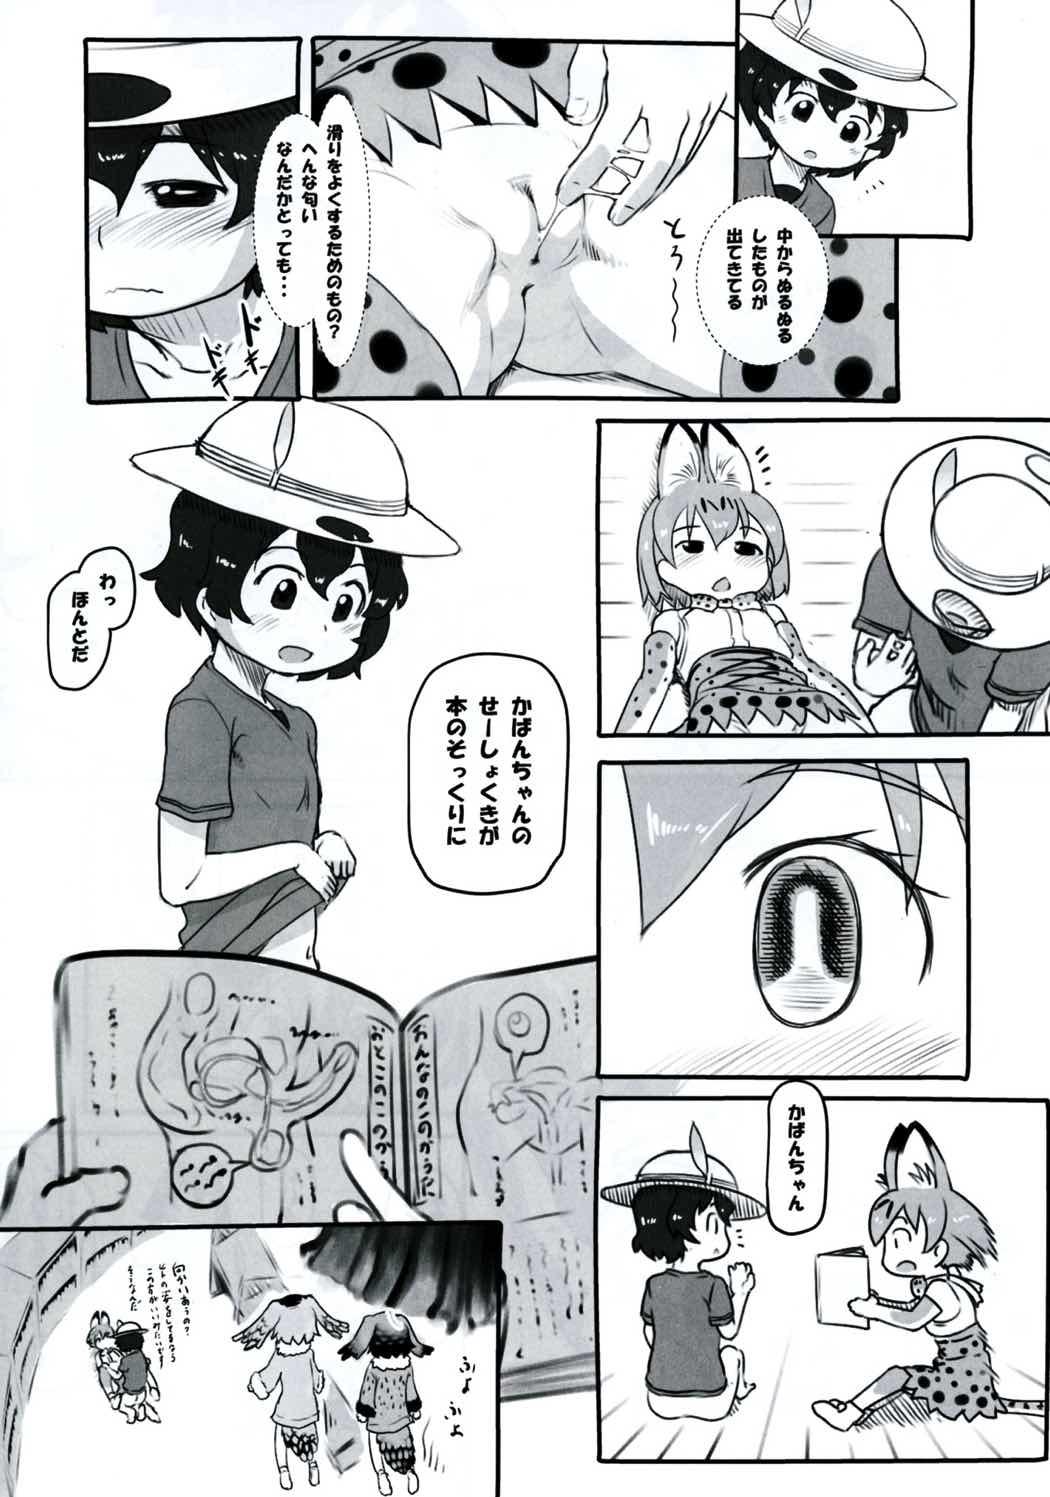 Trap Koubi no Shikata o Oshiete - Kemono friends Eng Sub - Page 10